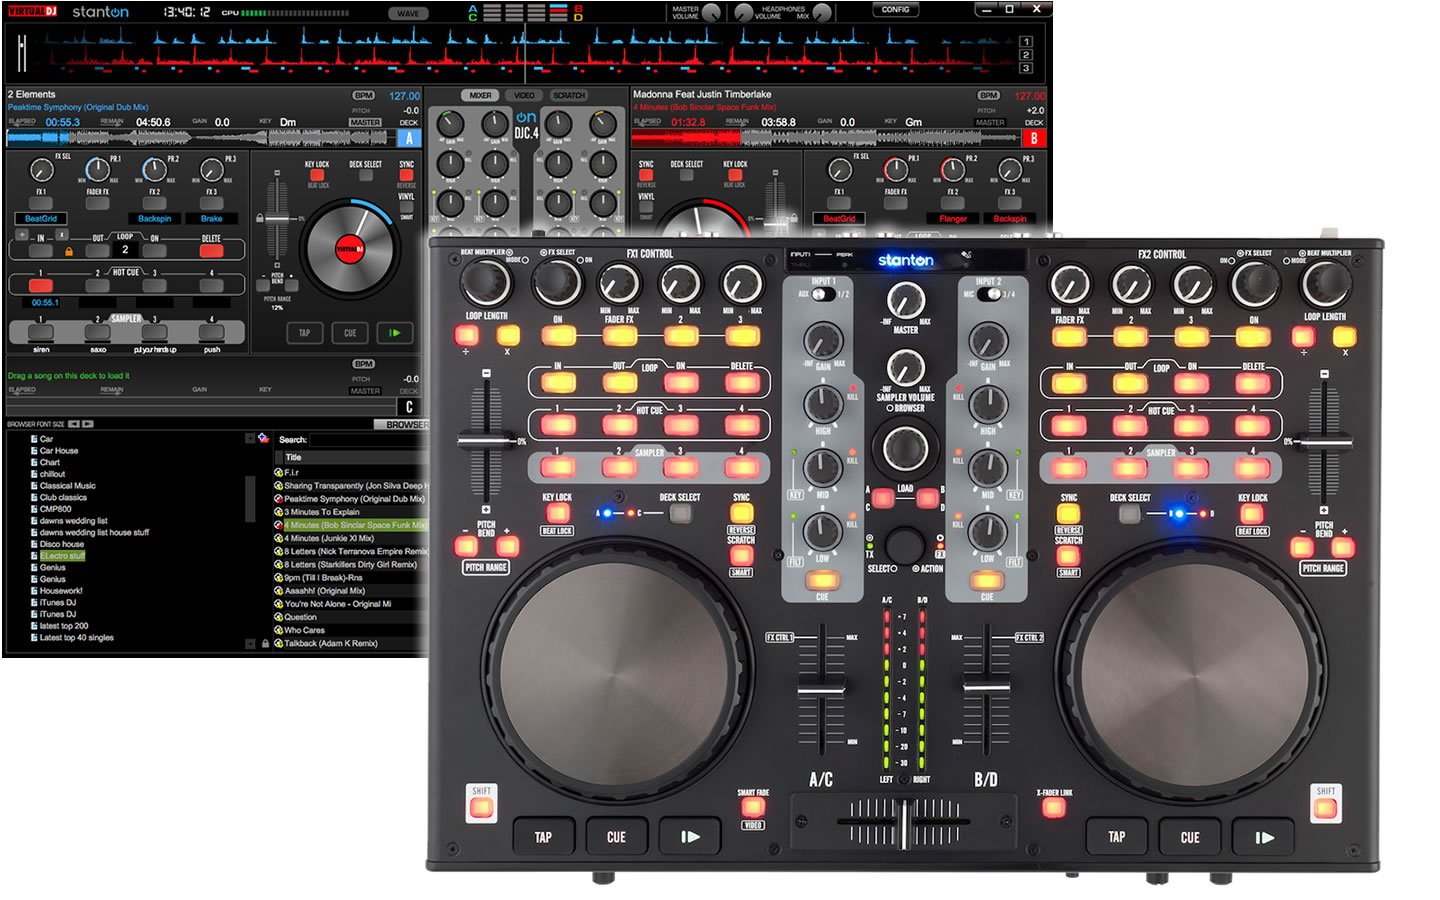 Stanton DJC4 4 Deck DJ Controller with 4 channel Audio Interface